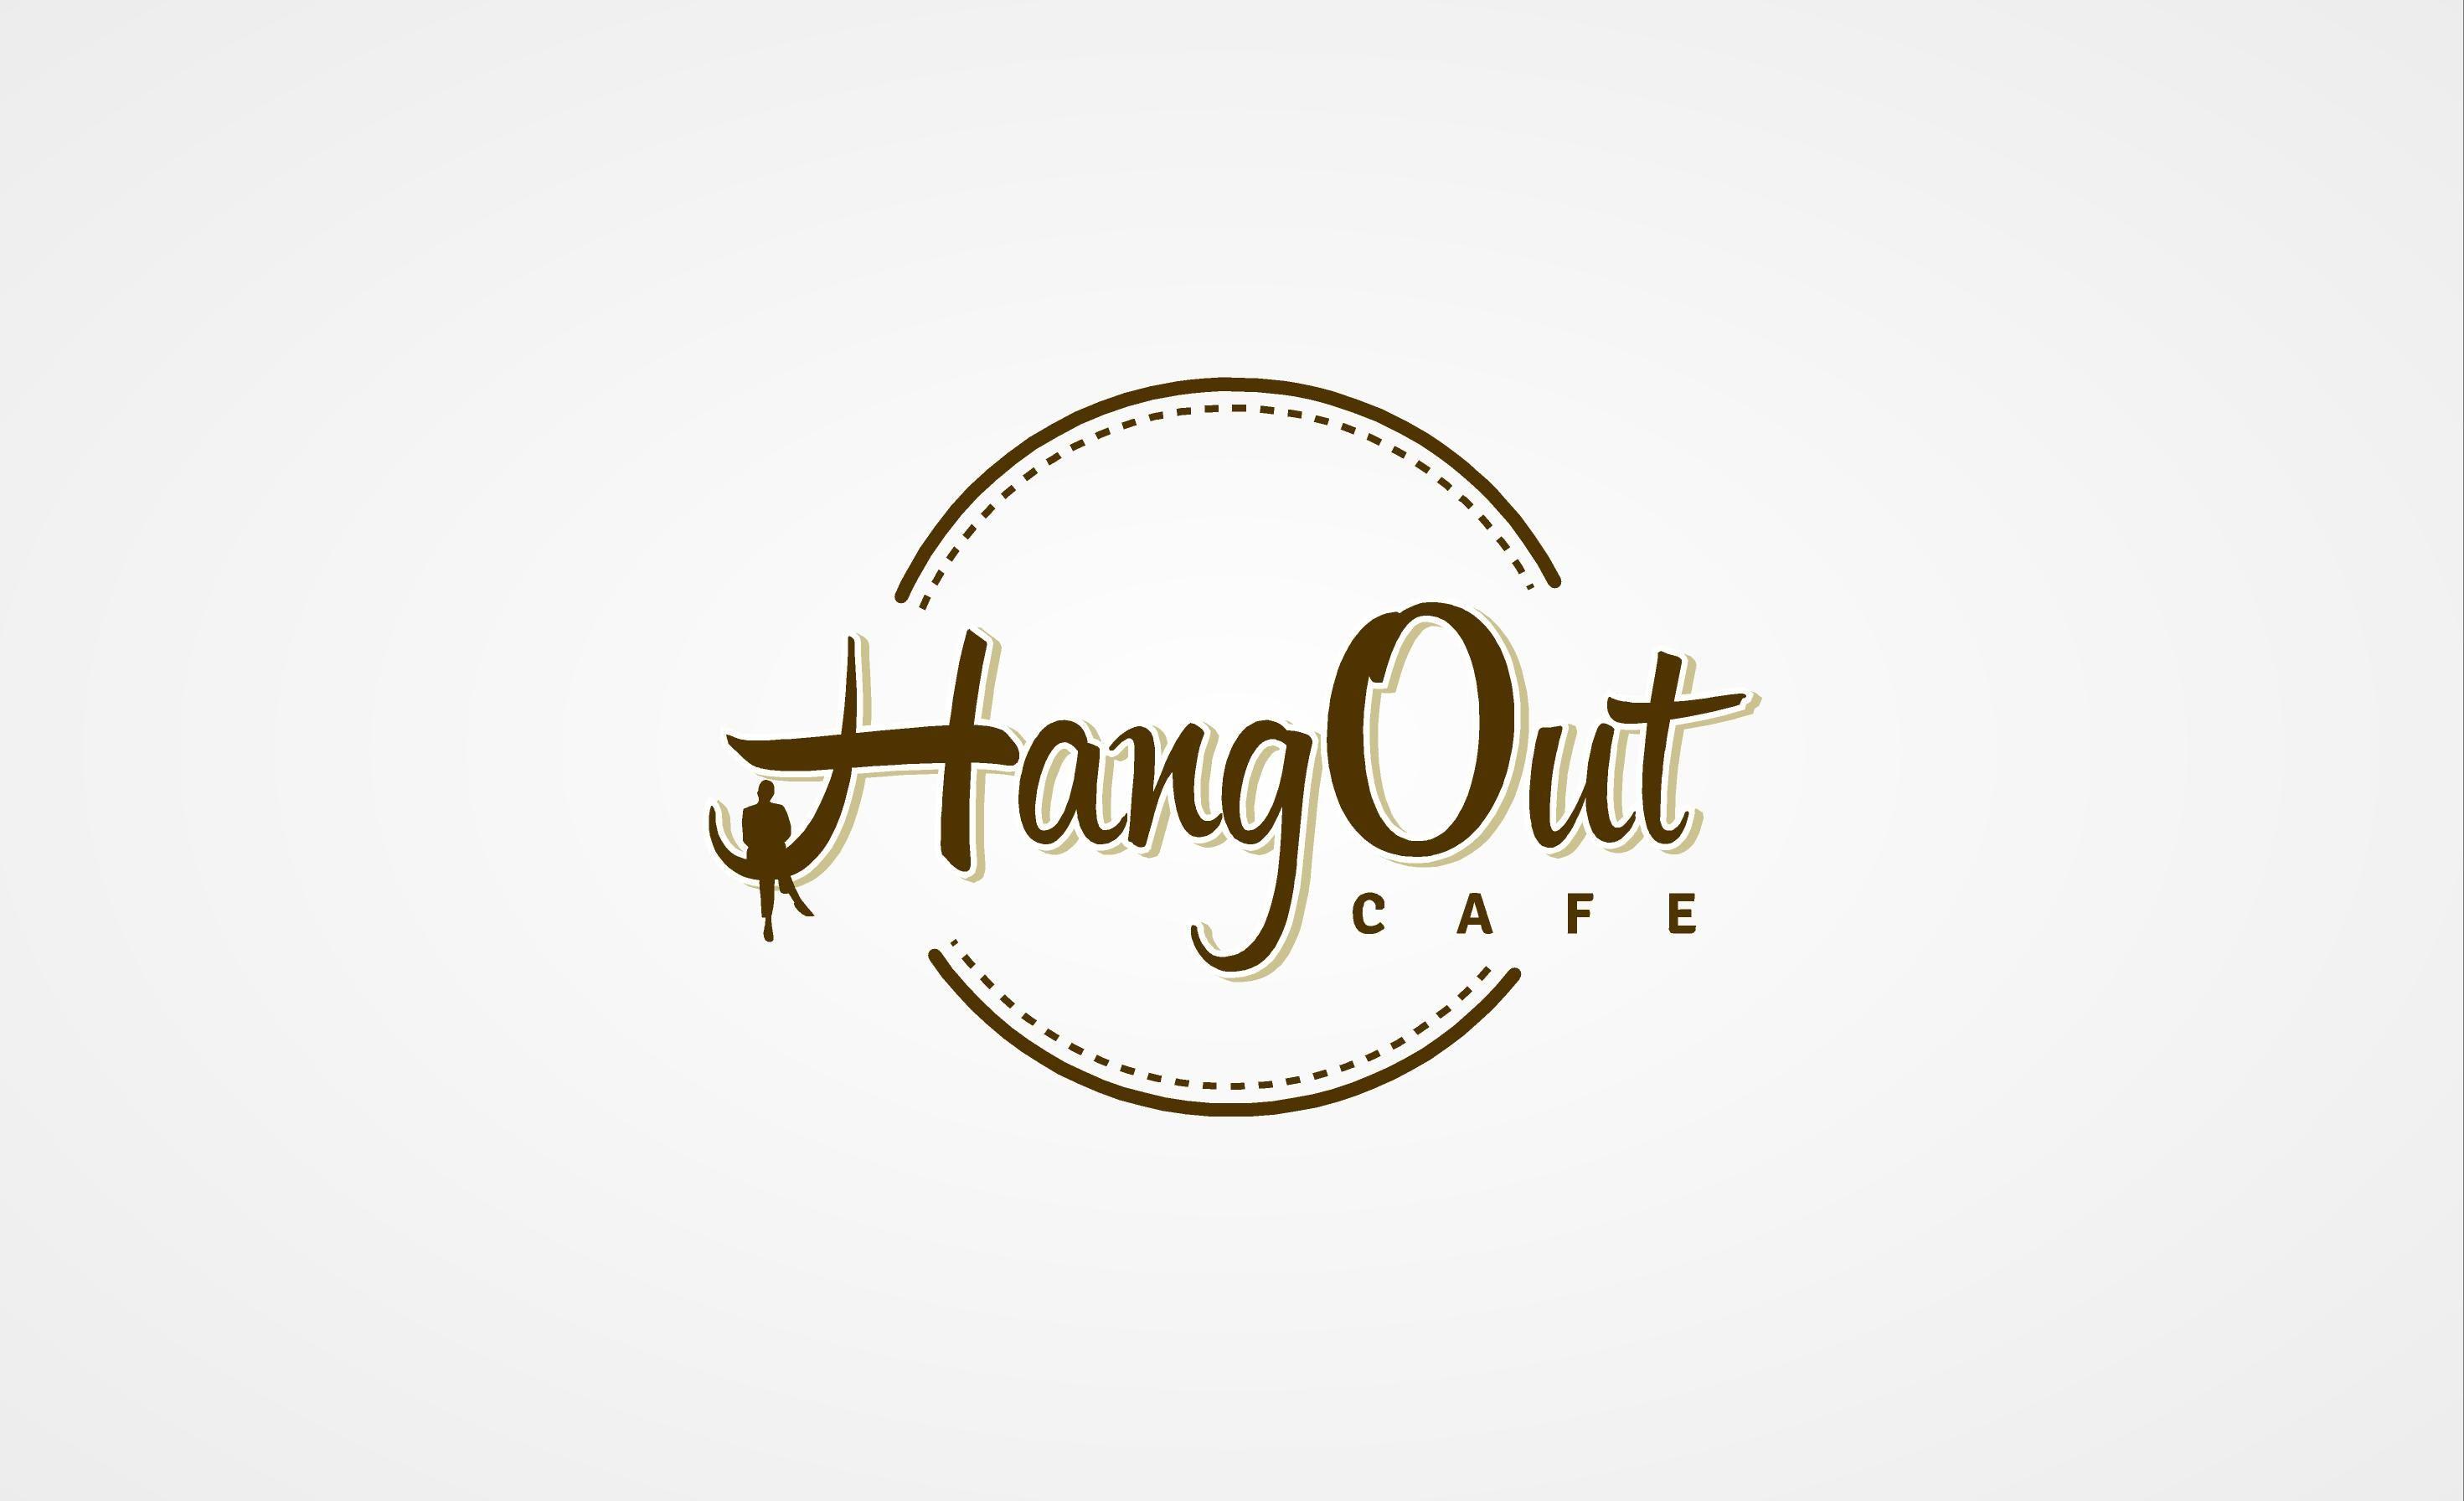 Cafe Logo - Sribu: Logo Design Logo Hangout Cafe Bandung